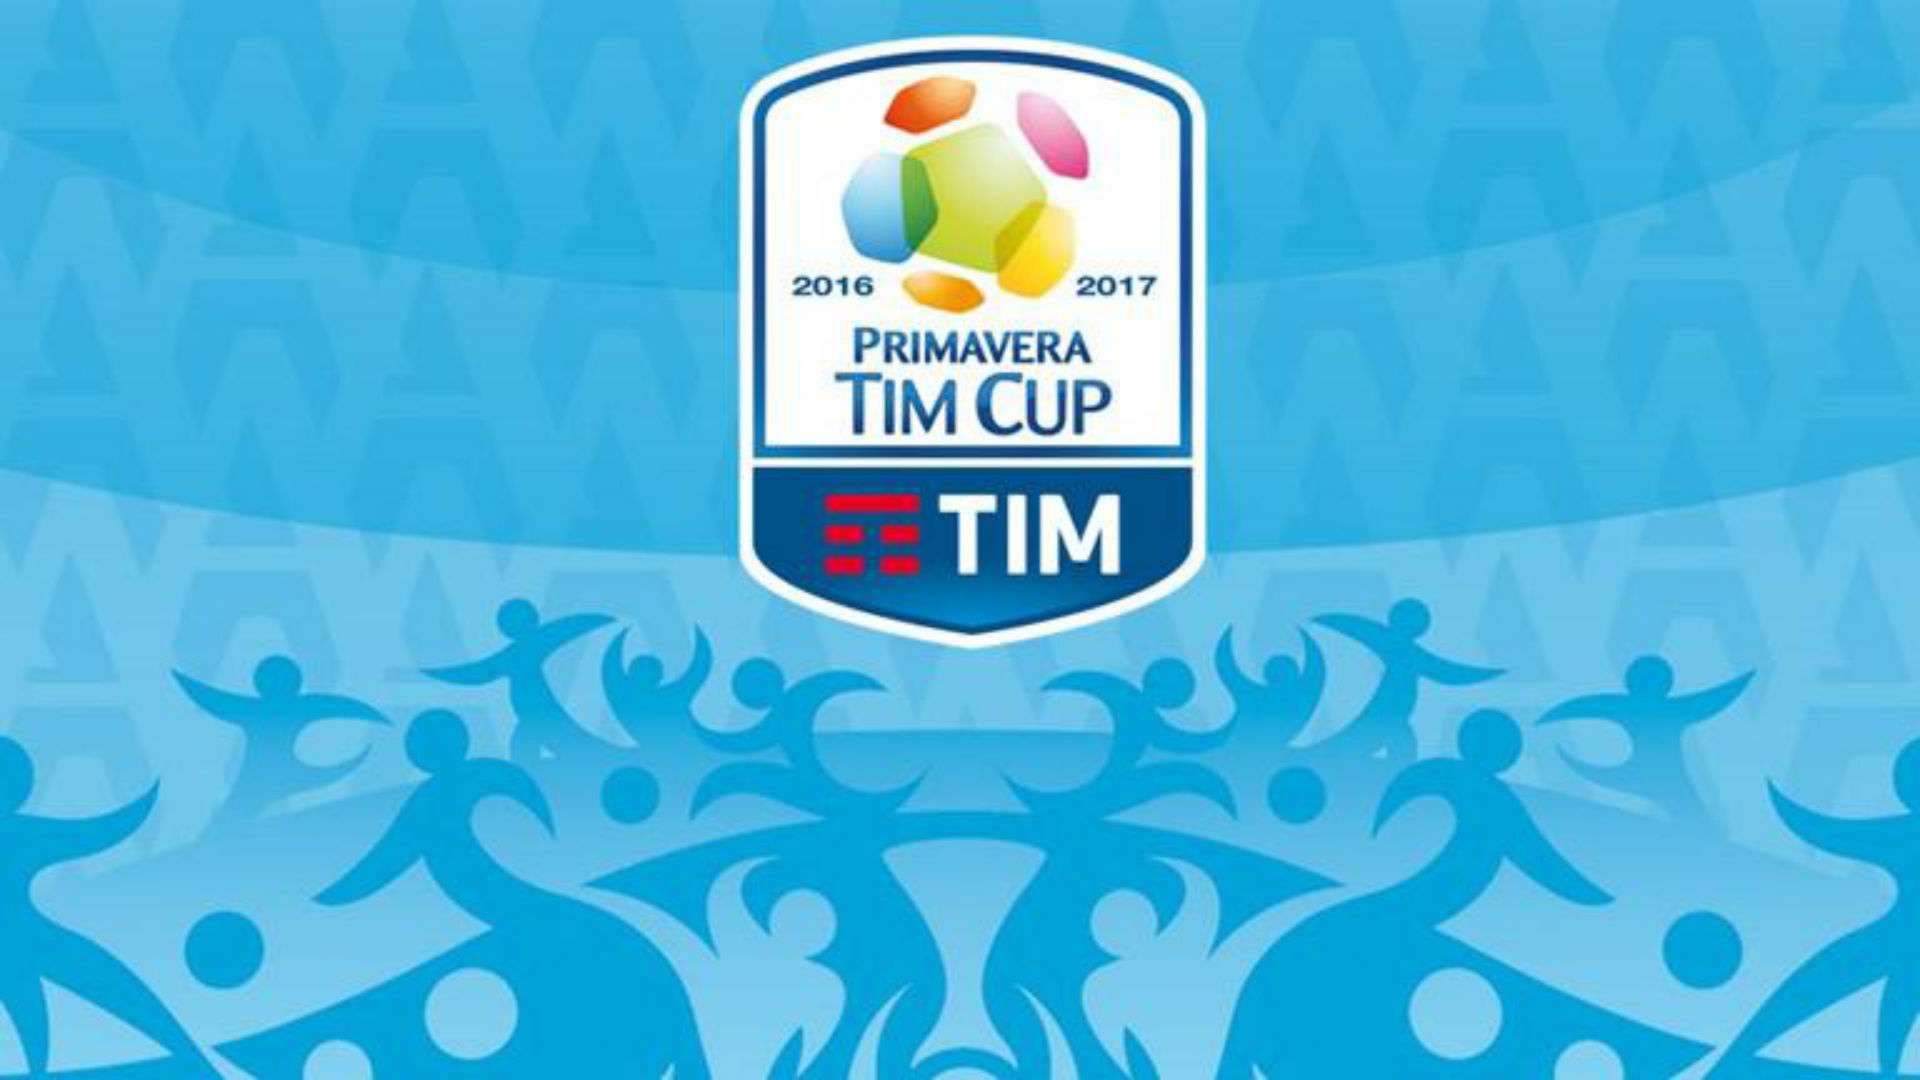 Primavera Tim Cup